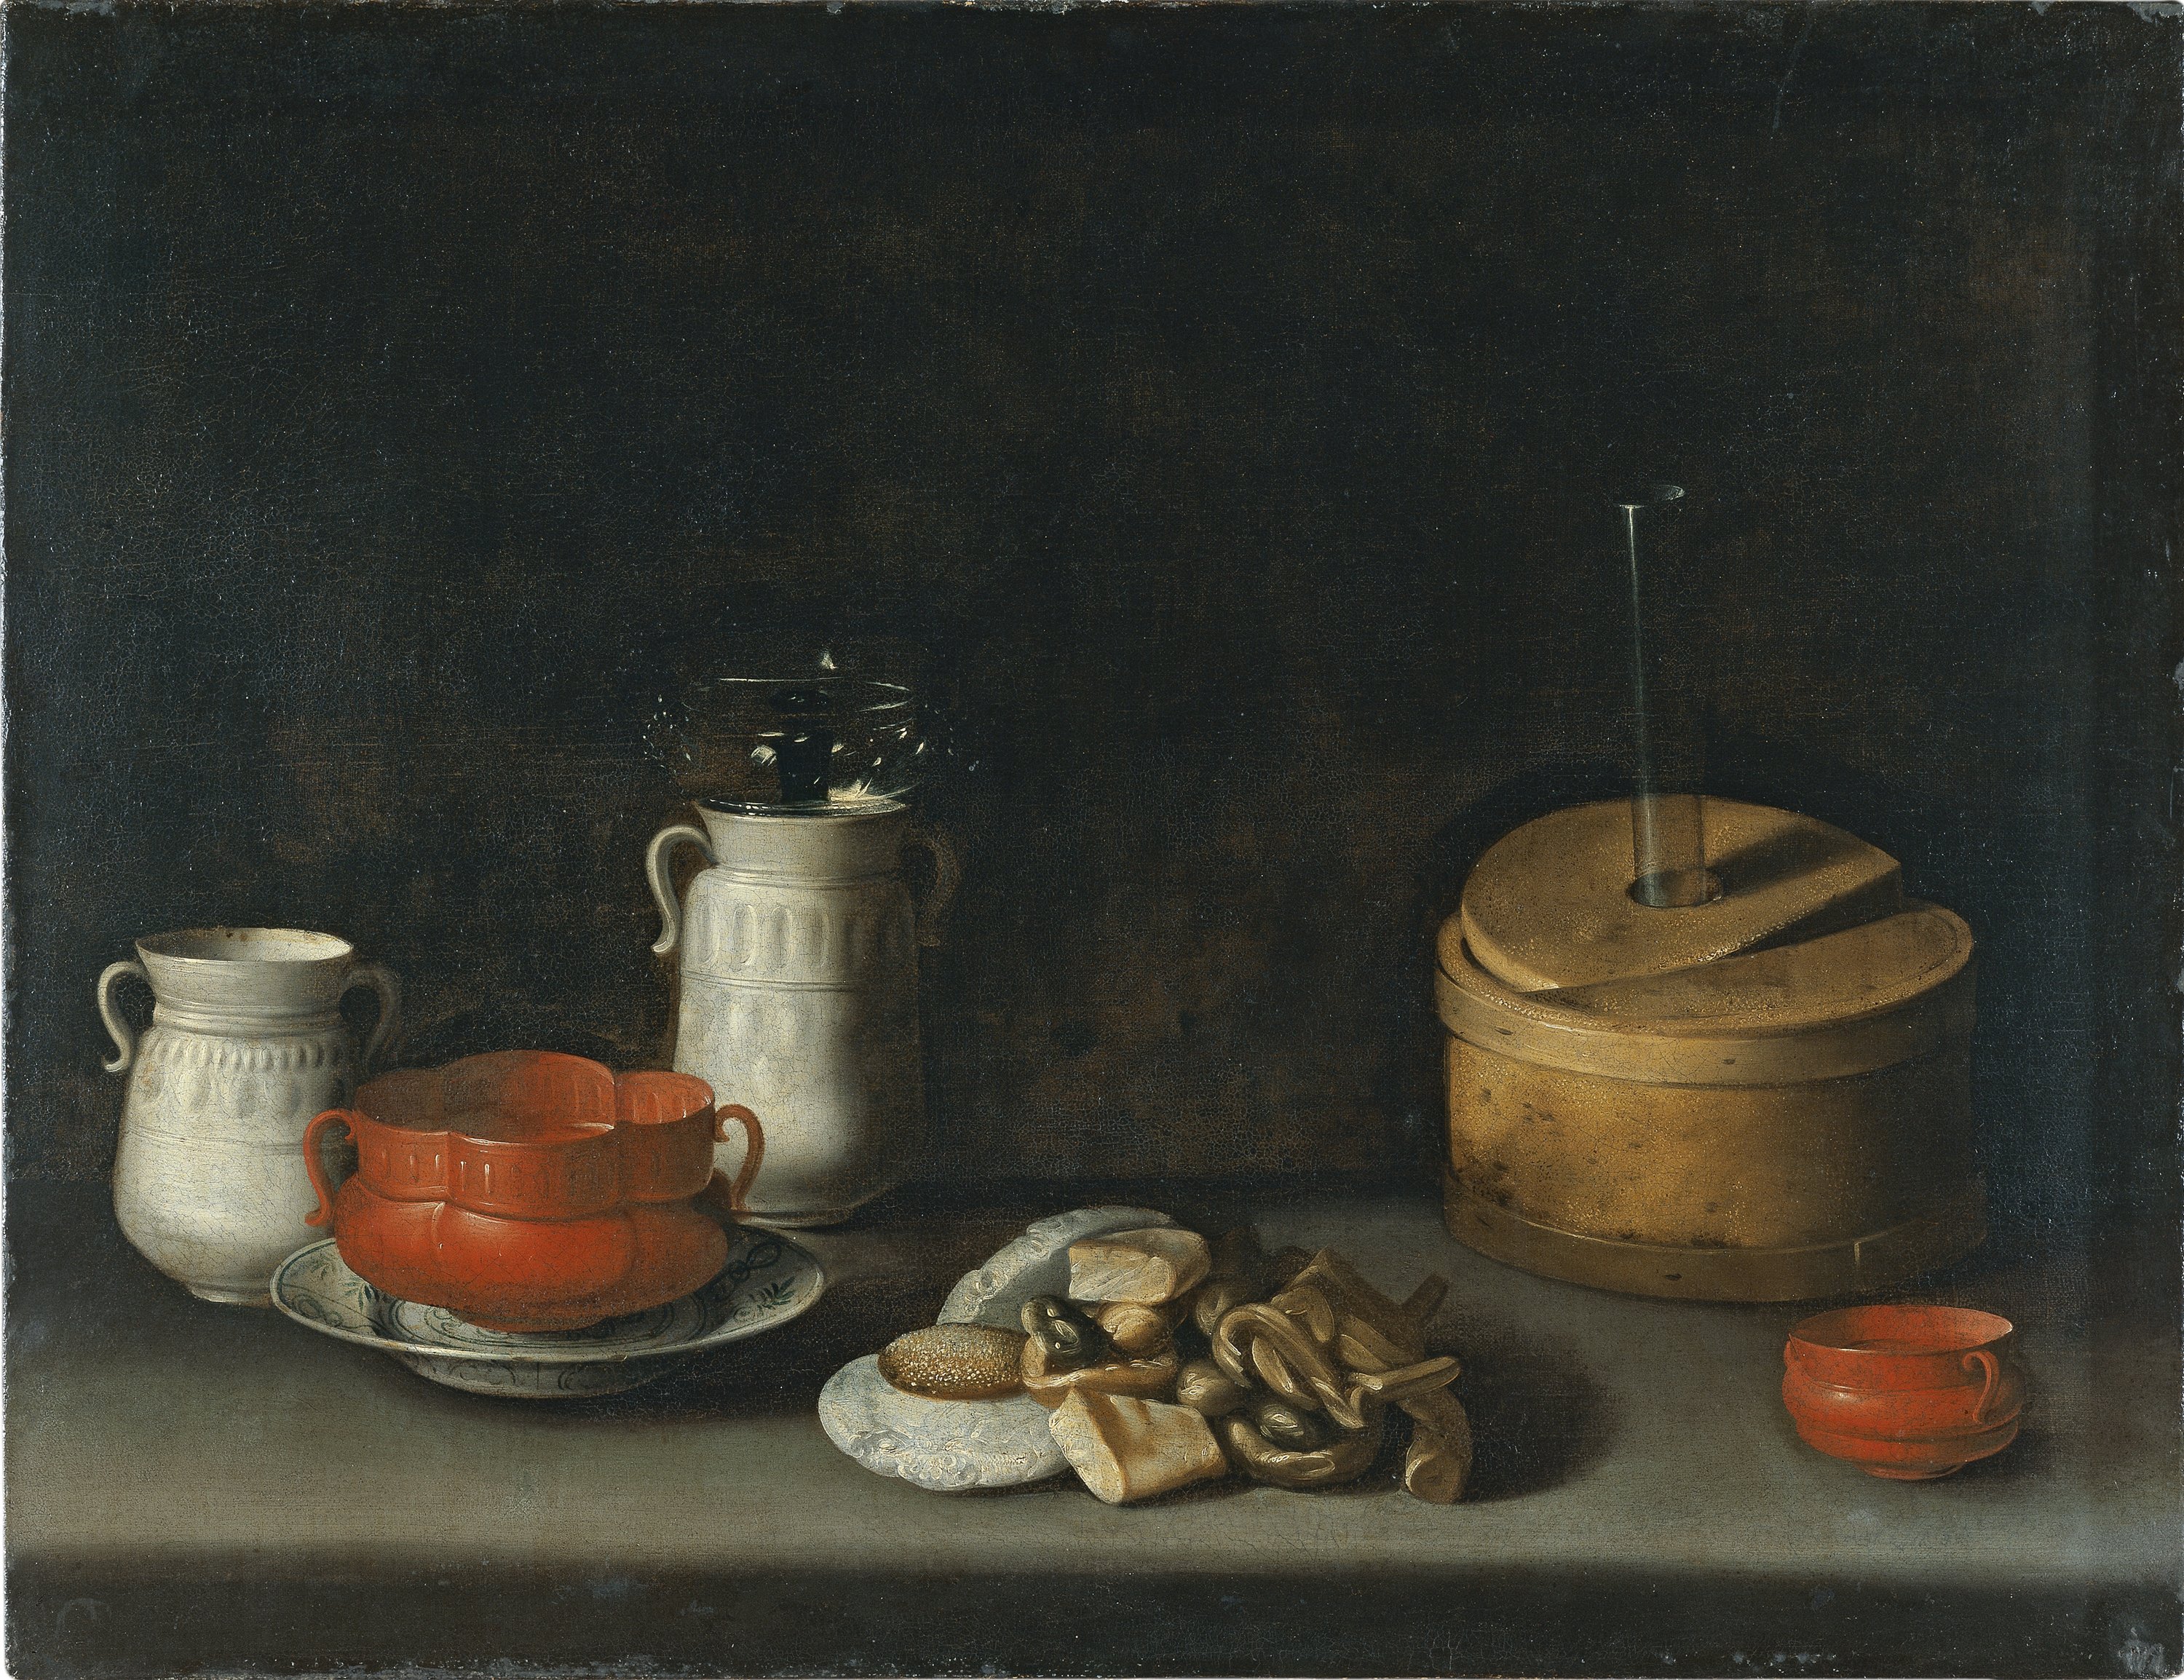 Still Life with Porcelain and Sweets - Hamen y León, van der. Museo Nacional Thyssen-Bornemisza